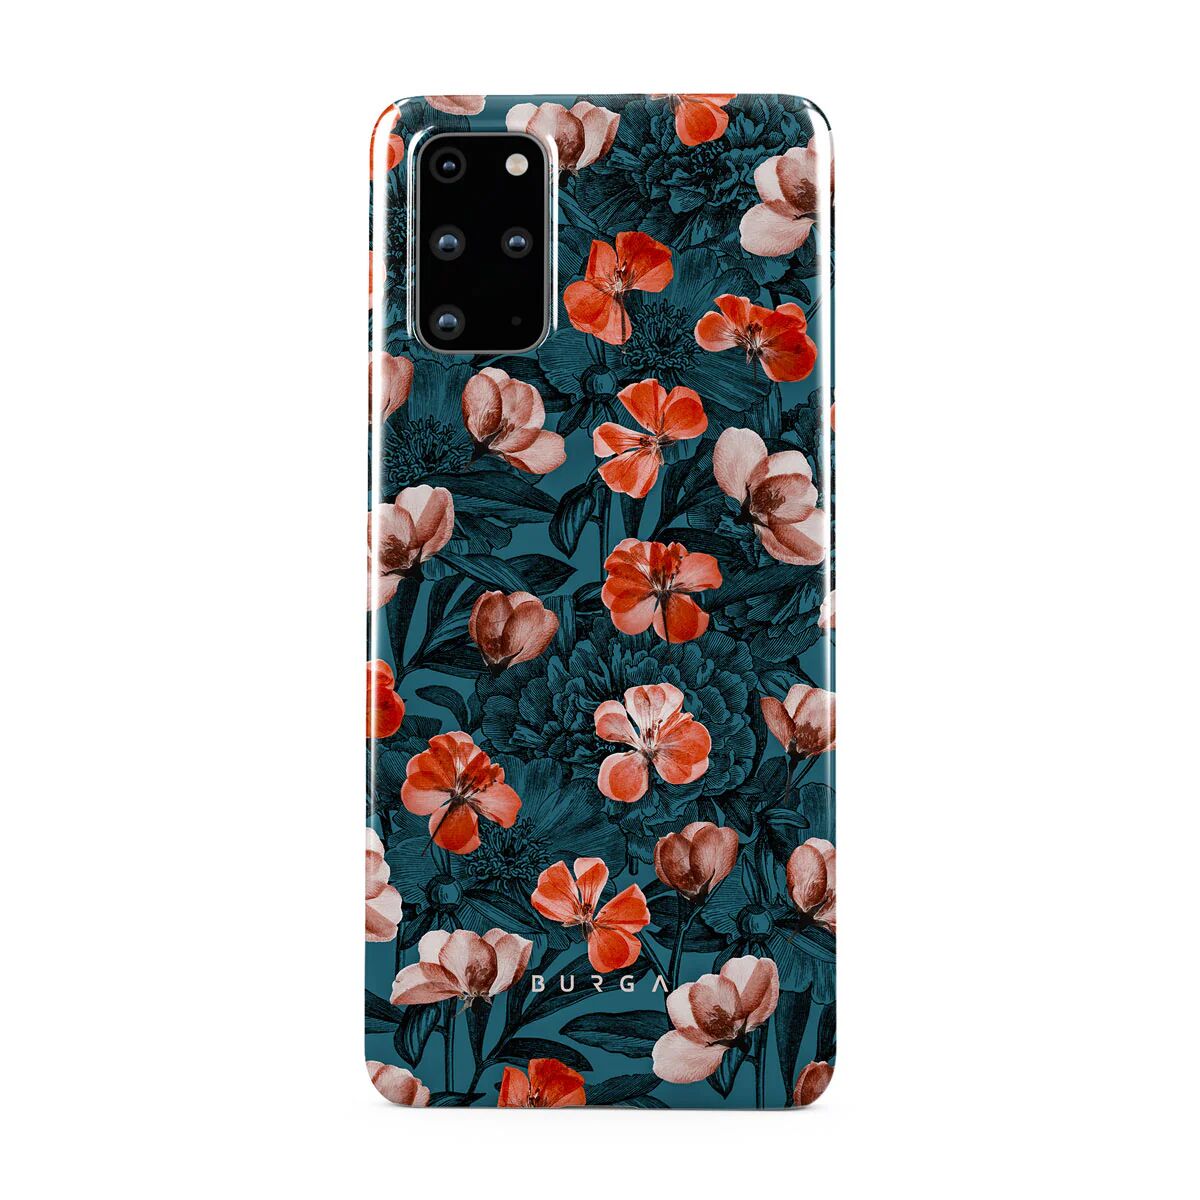 BURGA No Rain No Flowers - Samsung Galaxy S20 Plus Case